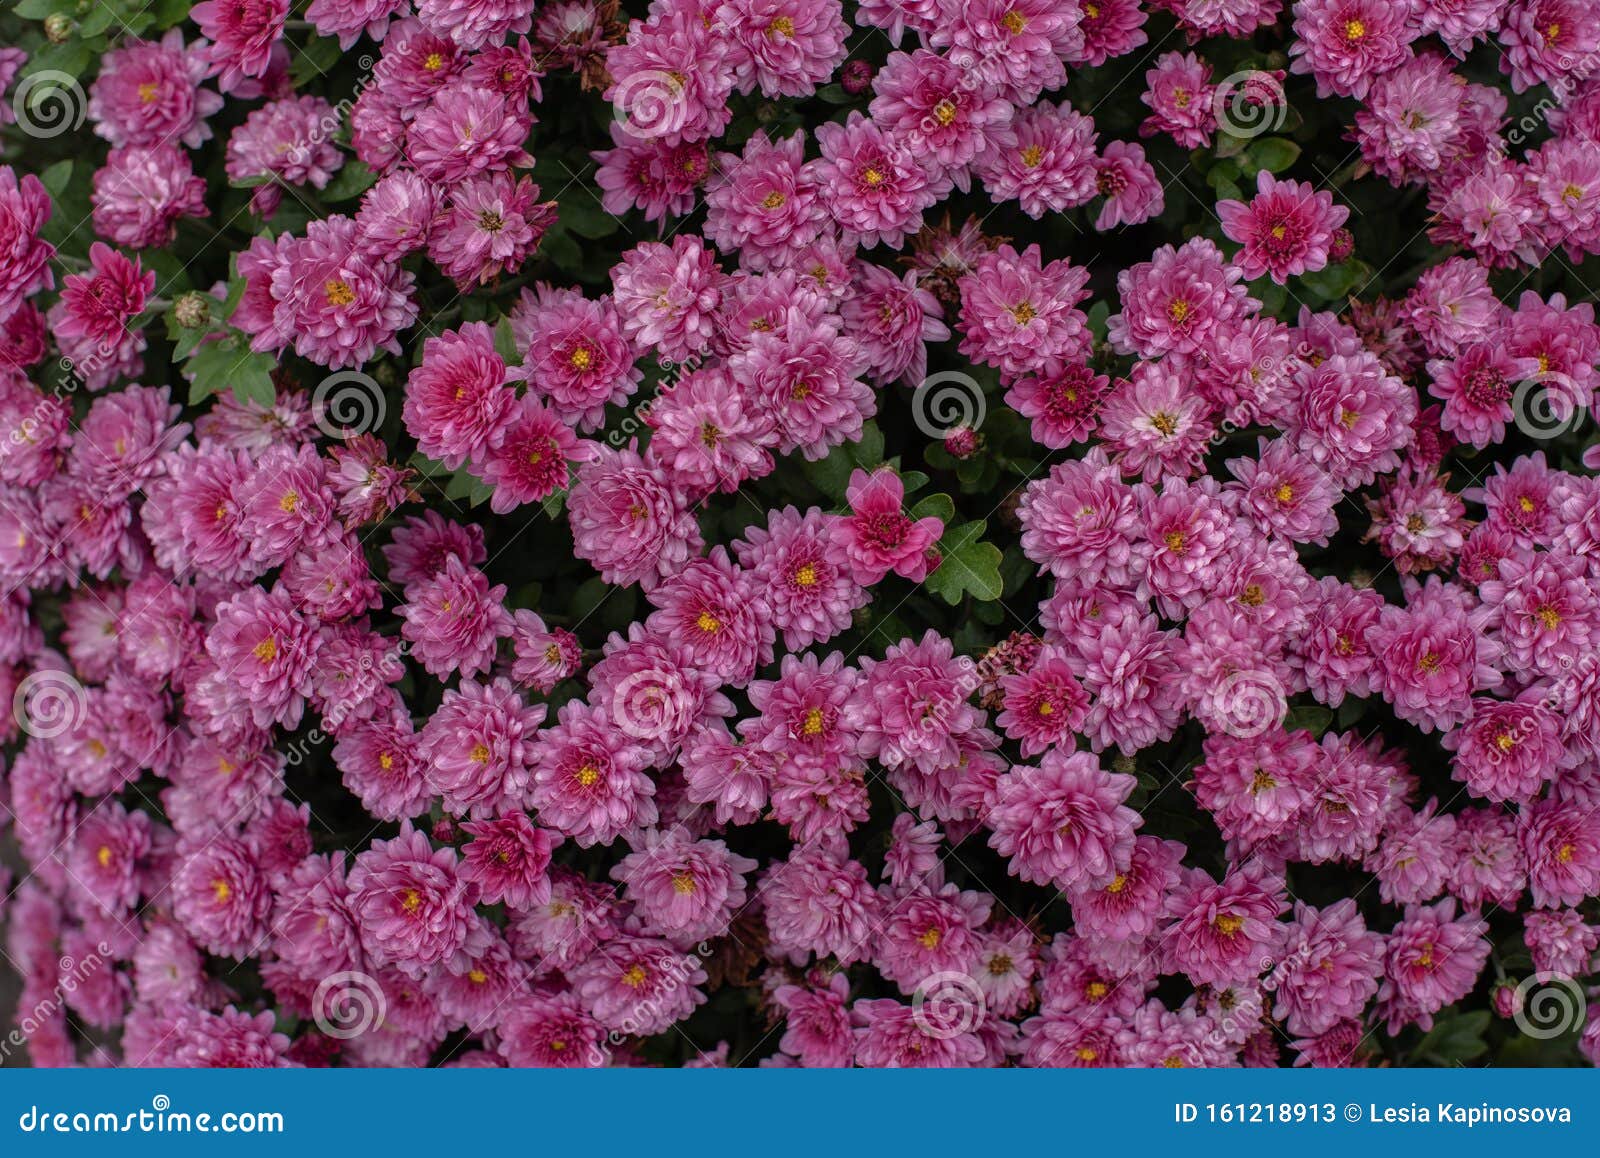 Florists Daisy Chrysanthemum Morifolium In Garden Stock Image Image Of Decoration Beautiful 161218913